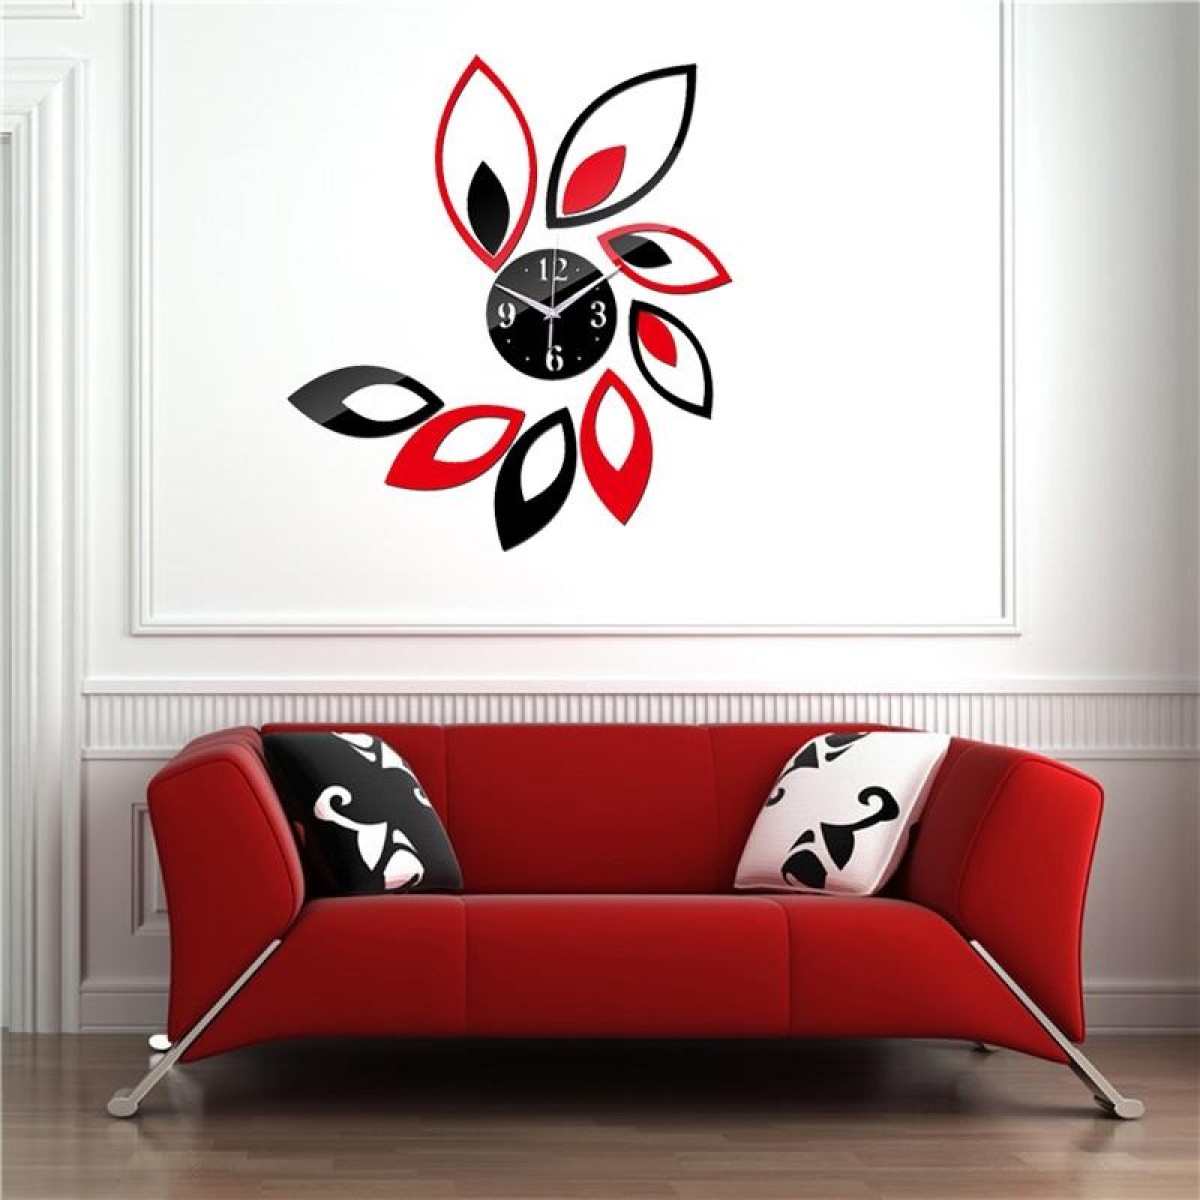 Flower Art Modern Design DIY Removable 3D Crystal Mirror Wall Clock Wall Sticker Living Room Bedroom Decor(Red+Black)